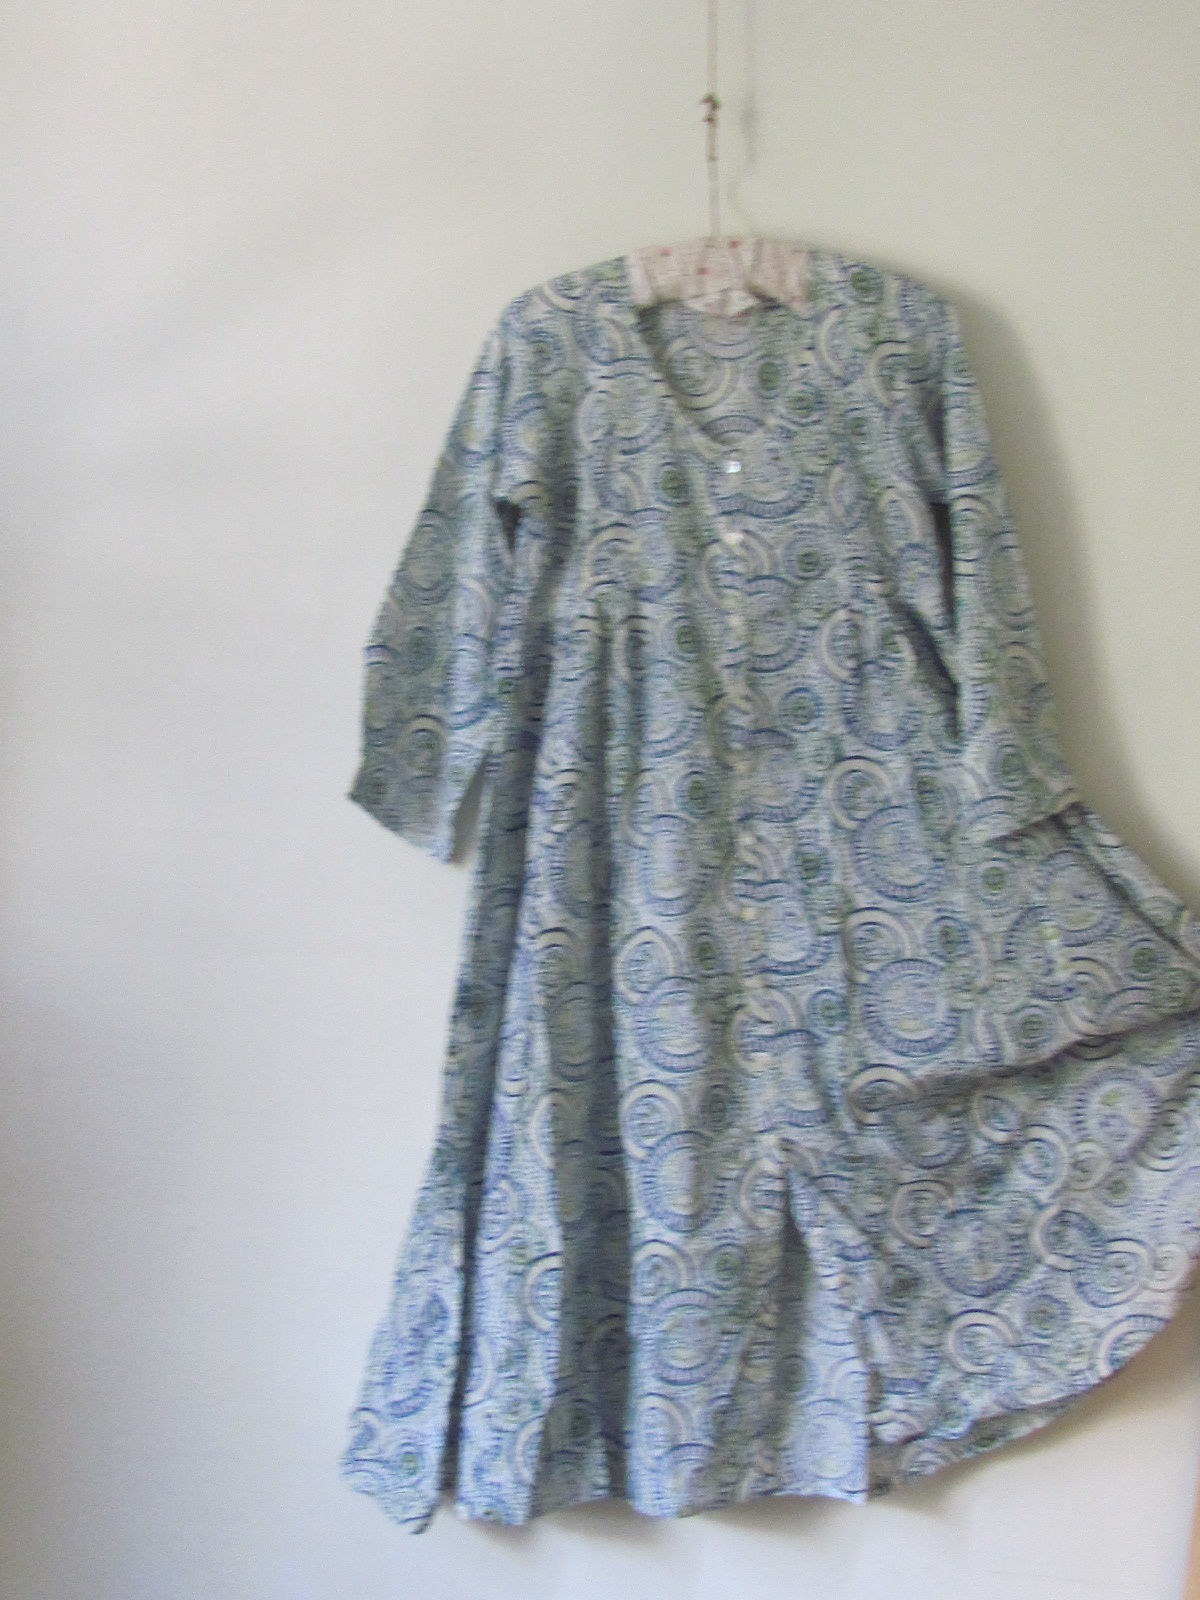 Block print (over) dress full skirt and thin cotton